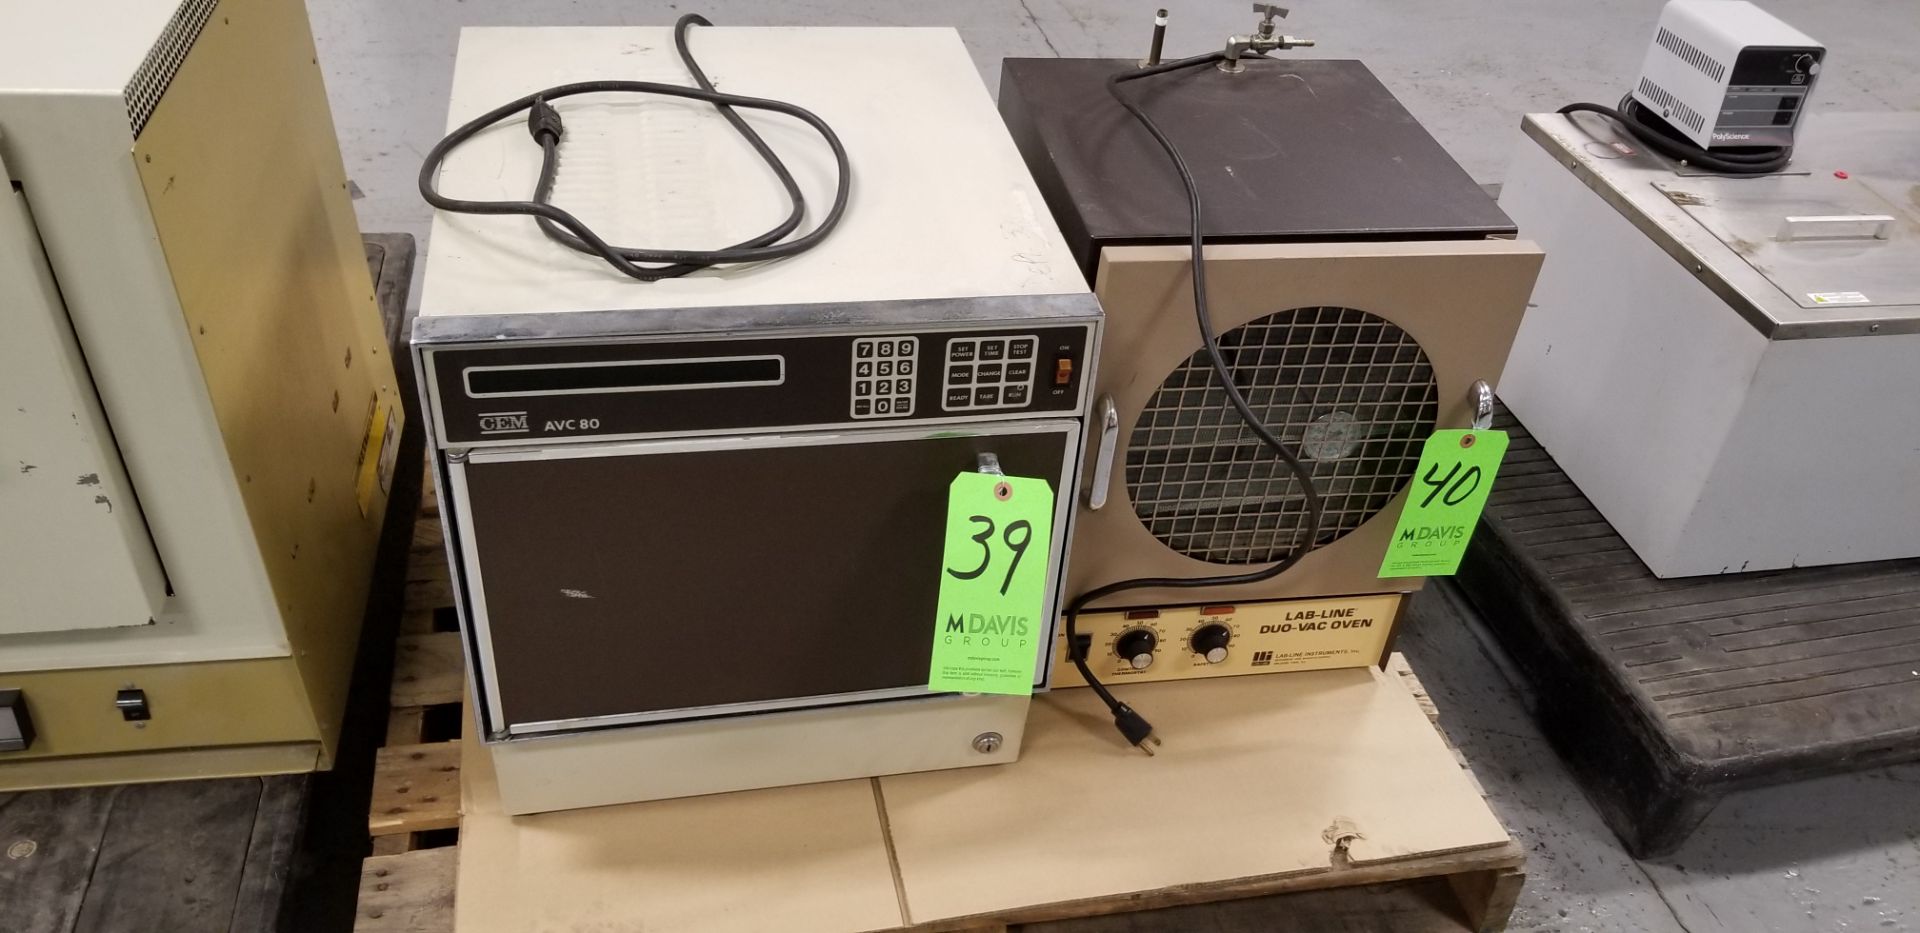 CEM Lab Microwave, Model AVC80, S/N 3251